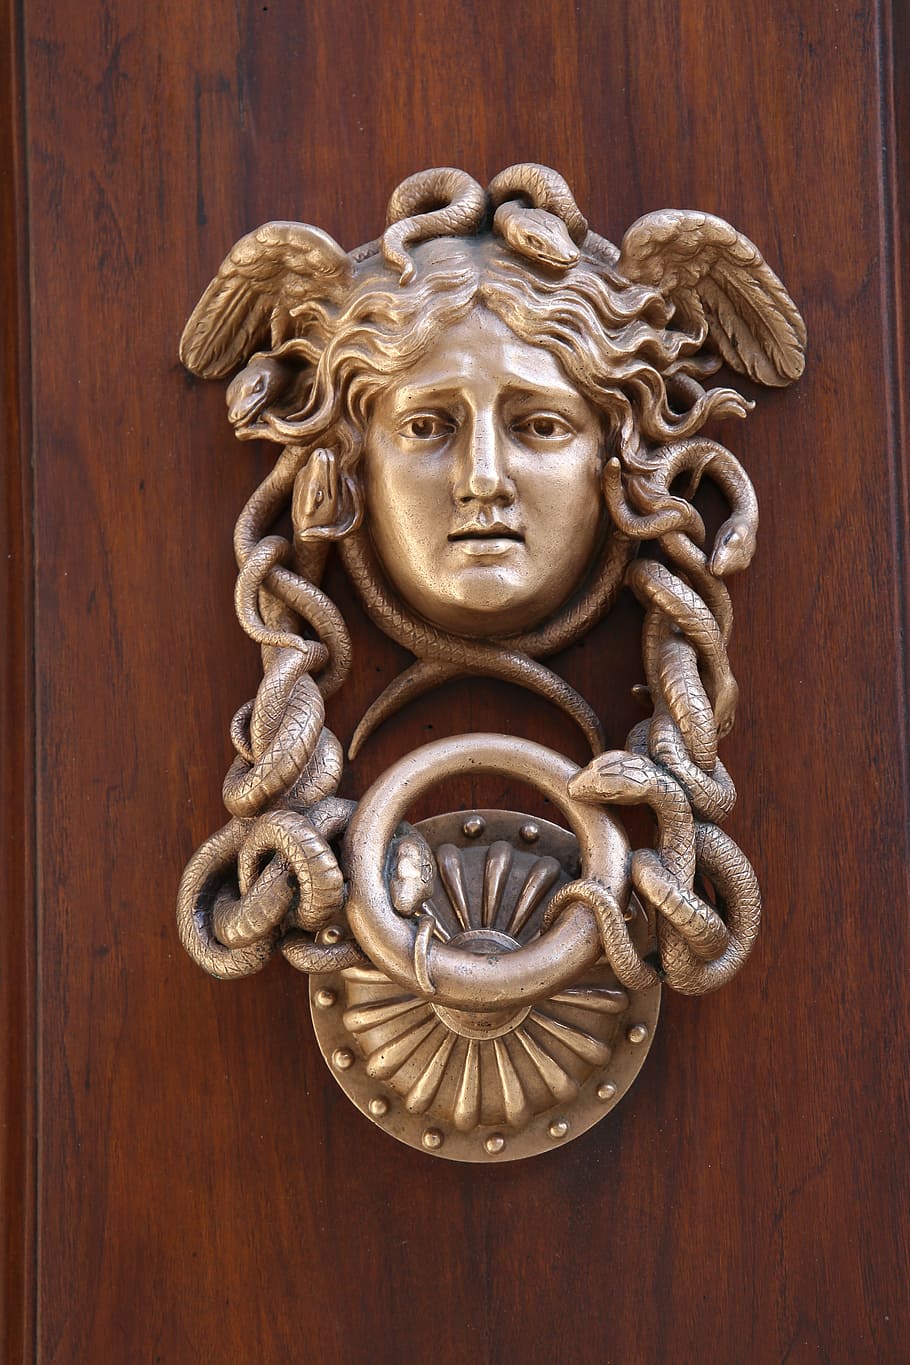 silver medusa door knocker, silver, medusa, door knocker, the door, entrance, italy, door, lion - feline, wood - material